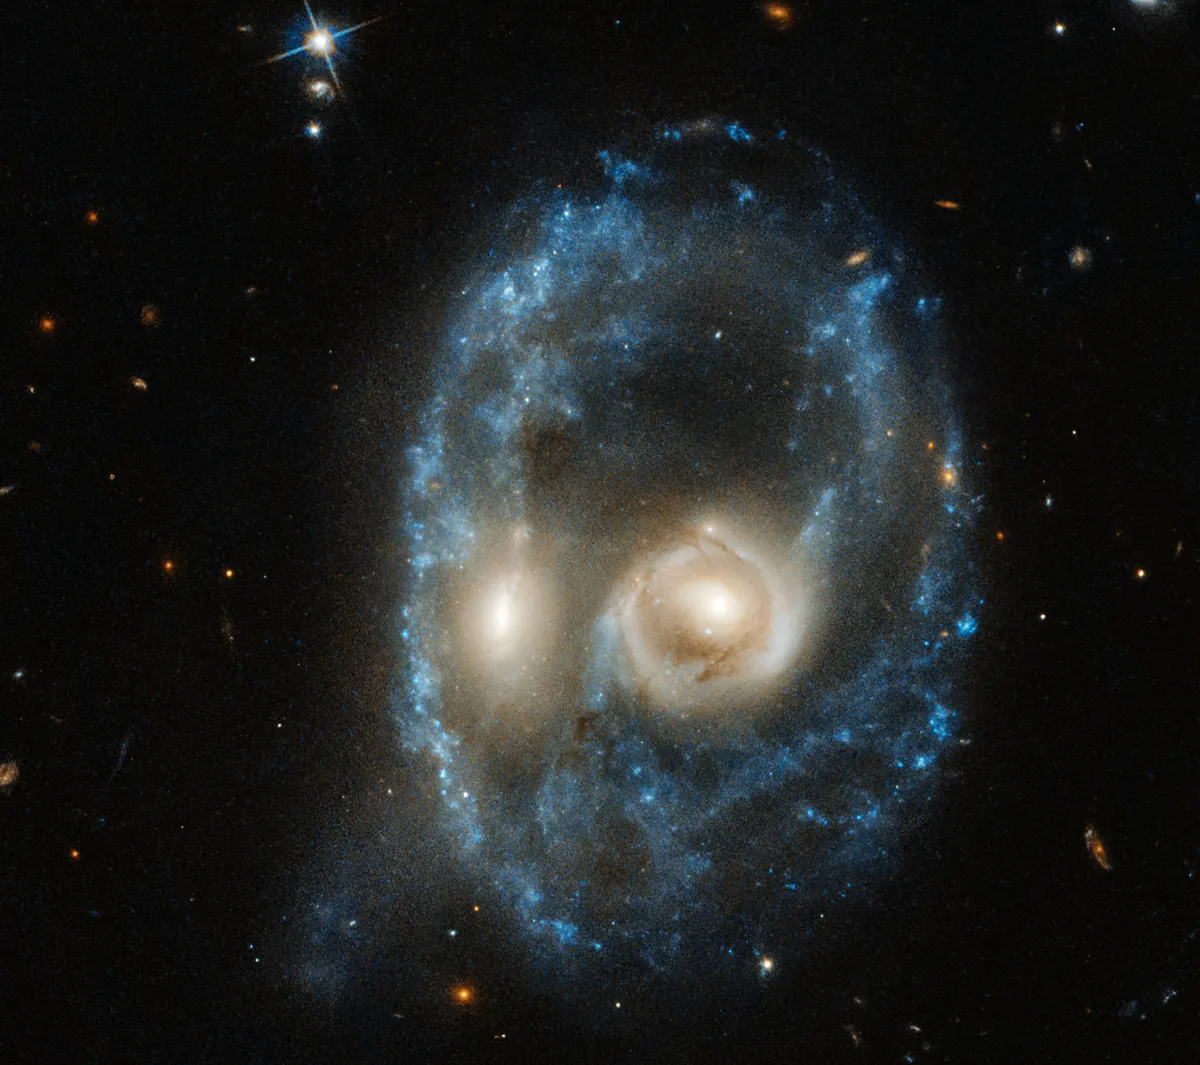 Galaxy merger Arp-Madore 2026-424 (AM 2026-424). Credit: NASA, ESA, and J. Dalcanton, B.F. Williams, and M. Durbin (University of Washington)